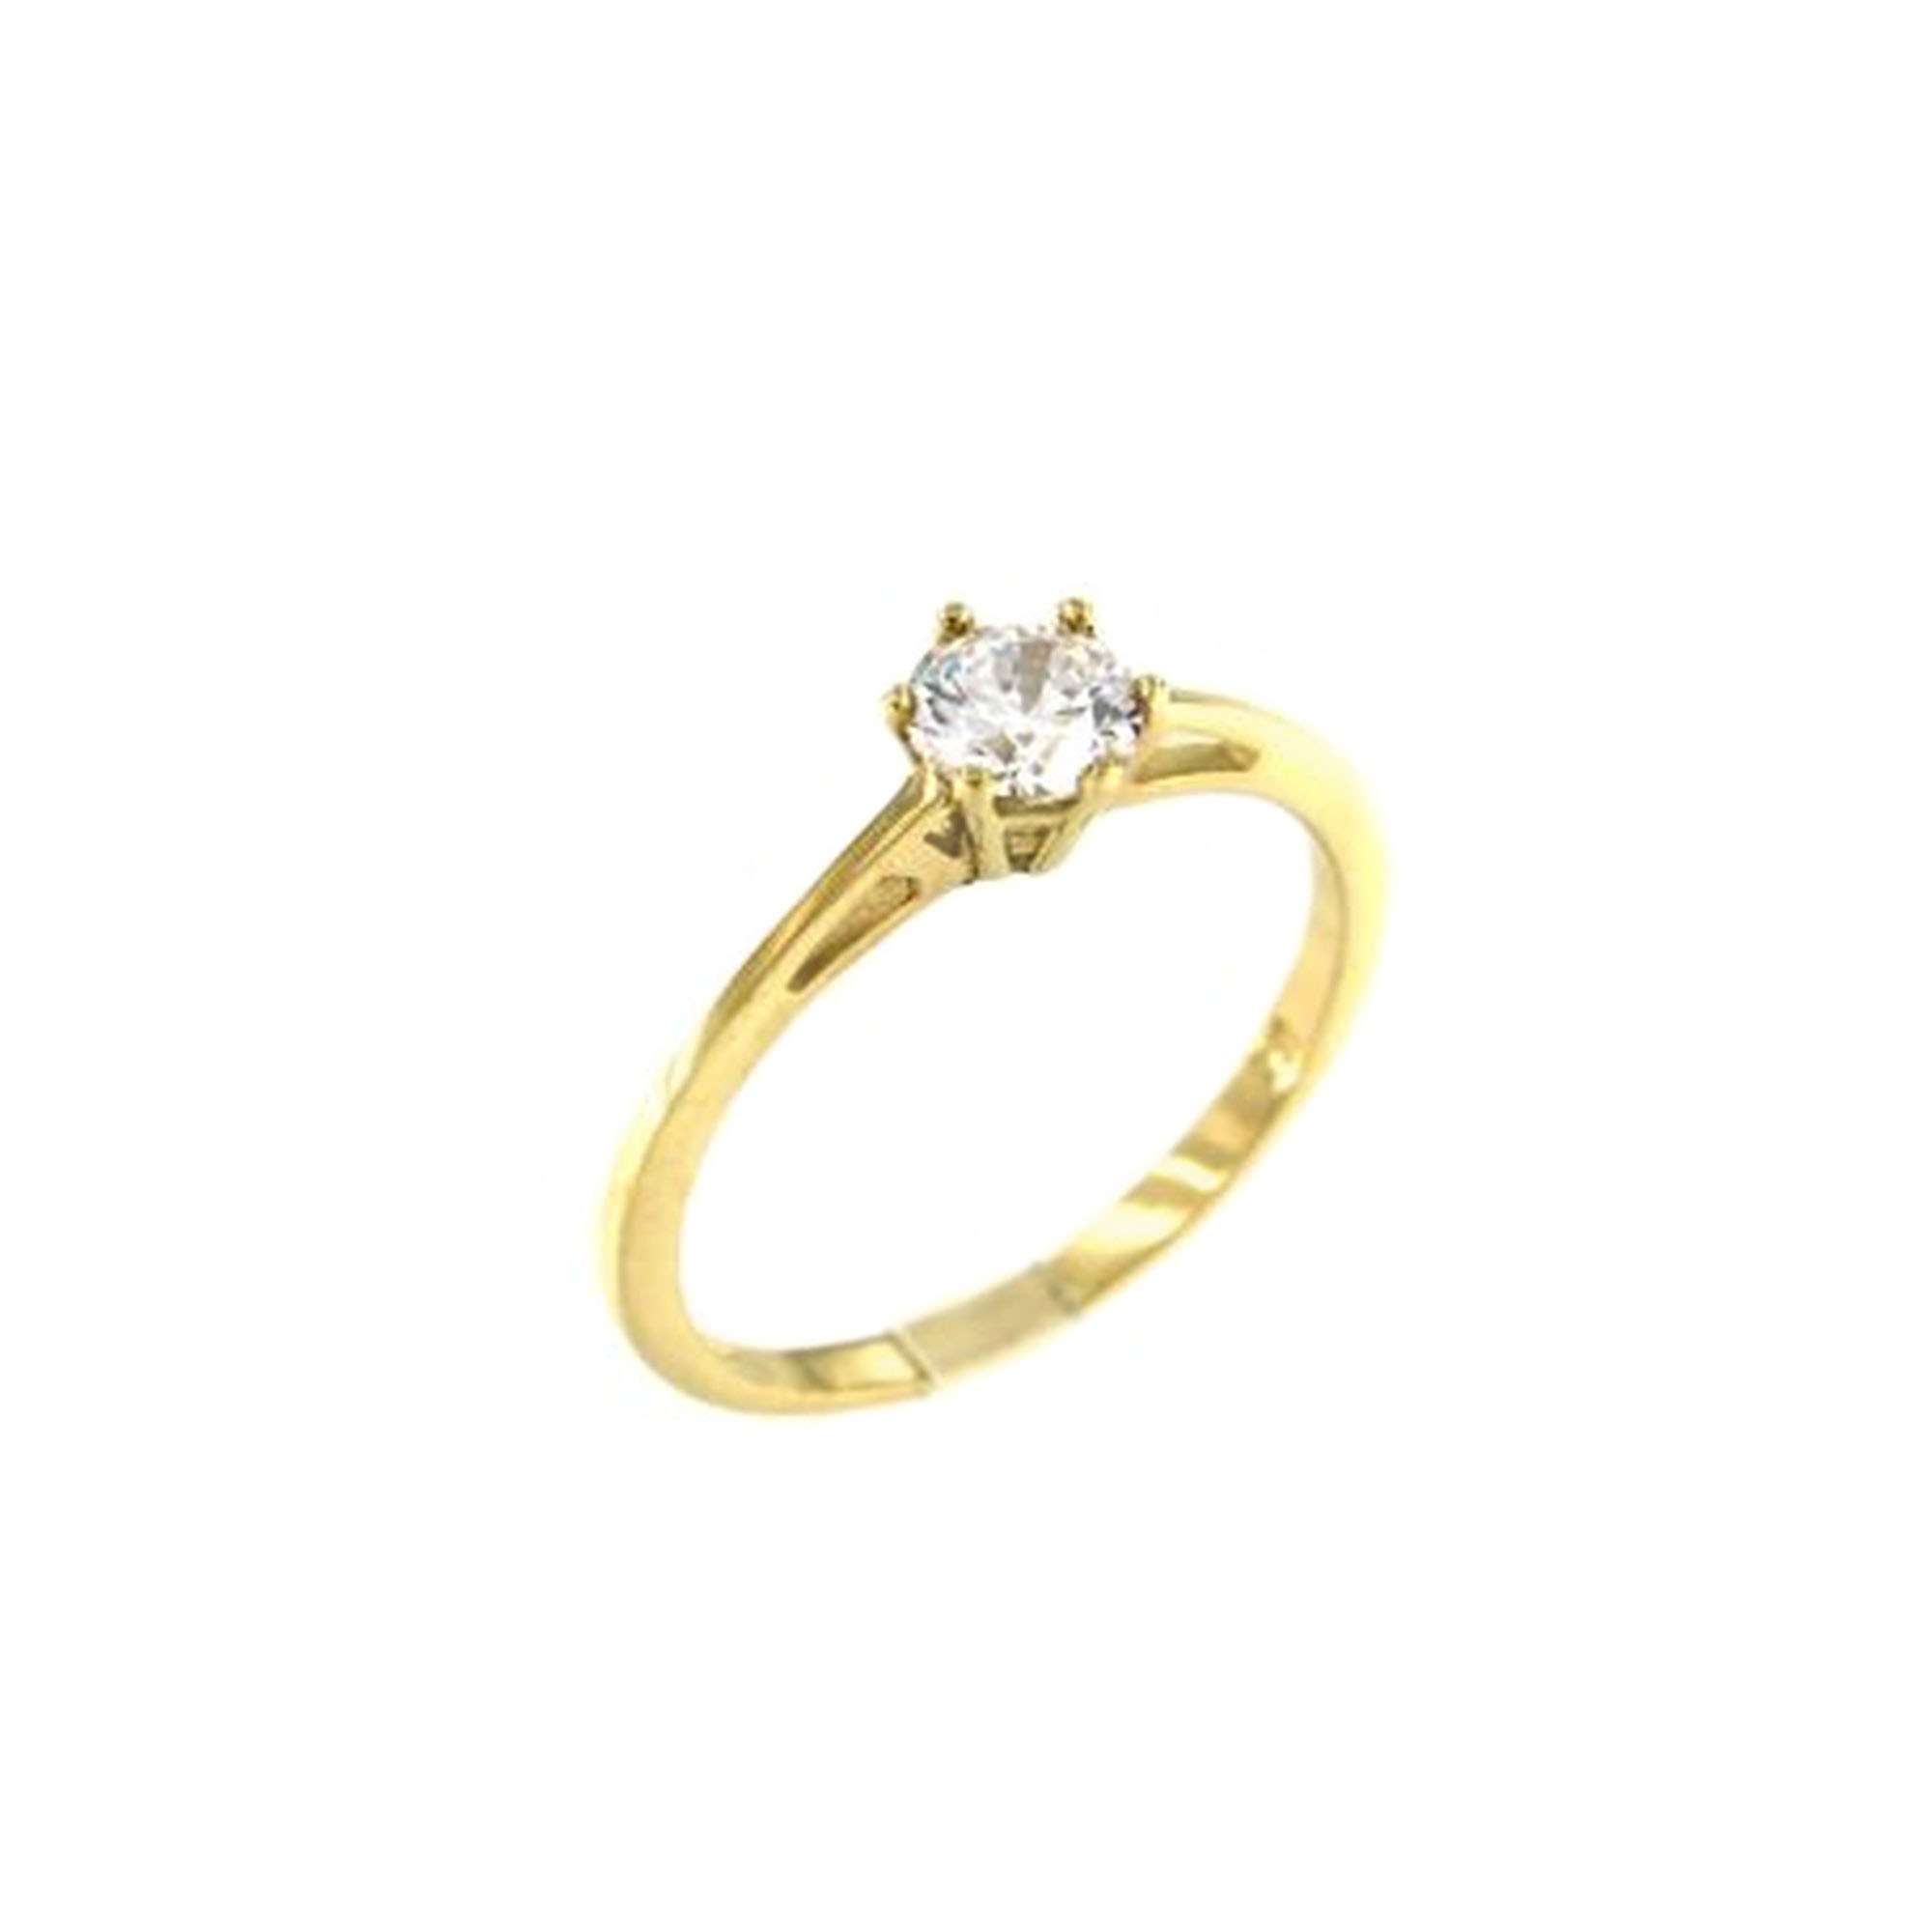 MOISS Moiss prsten ze žlutého zlata ANDREA RA000258 Velikost 51 mm RA000258 + doprava ZDARMA